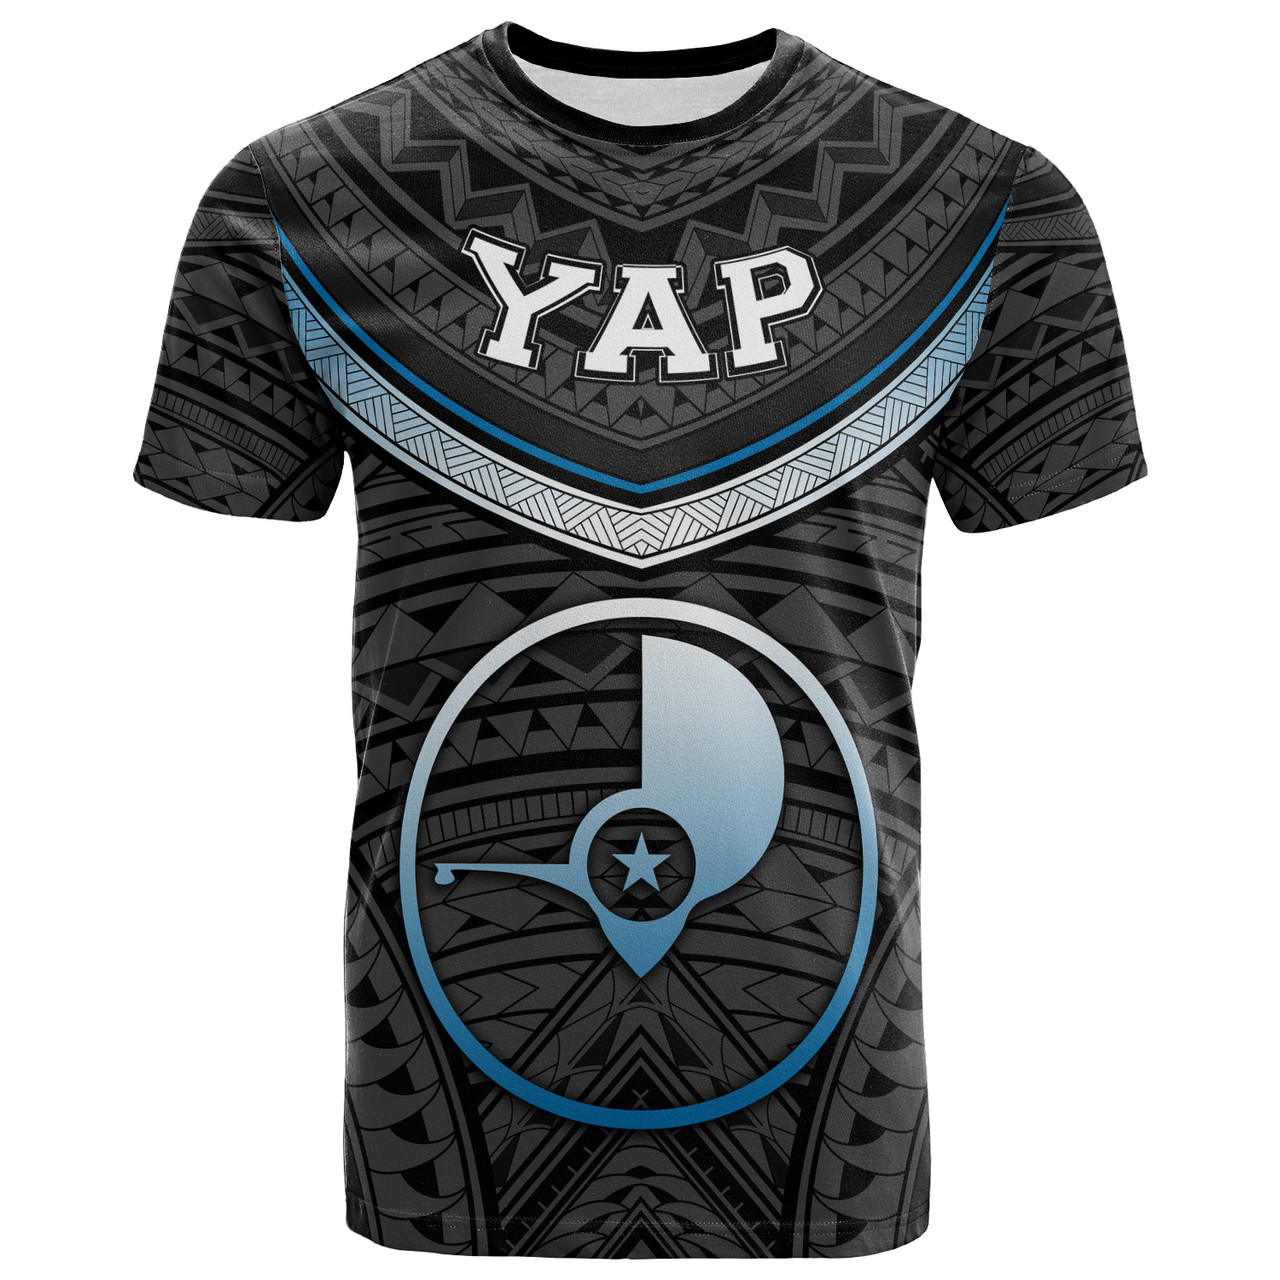 Yap T-Shirt Polynesian Authen